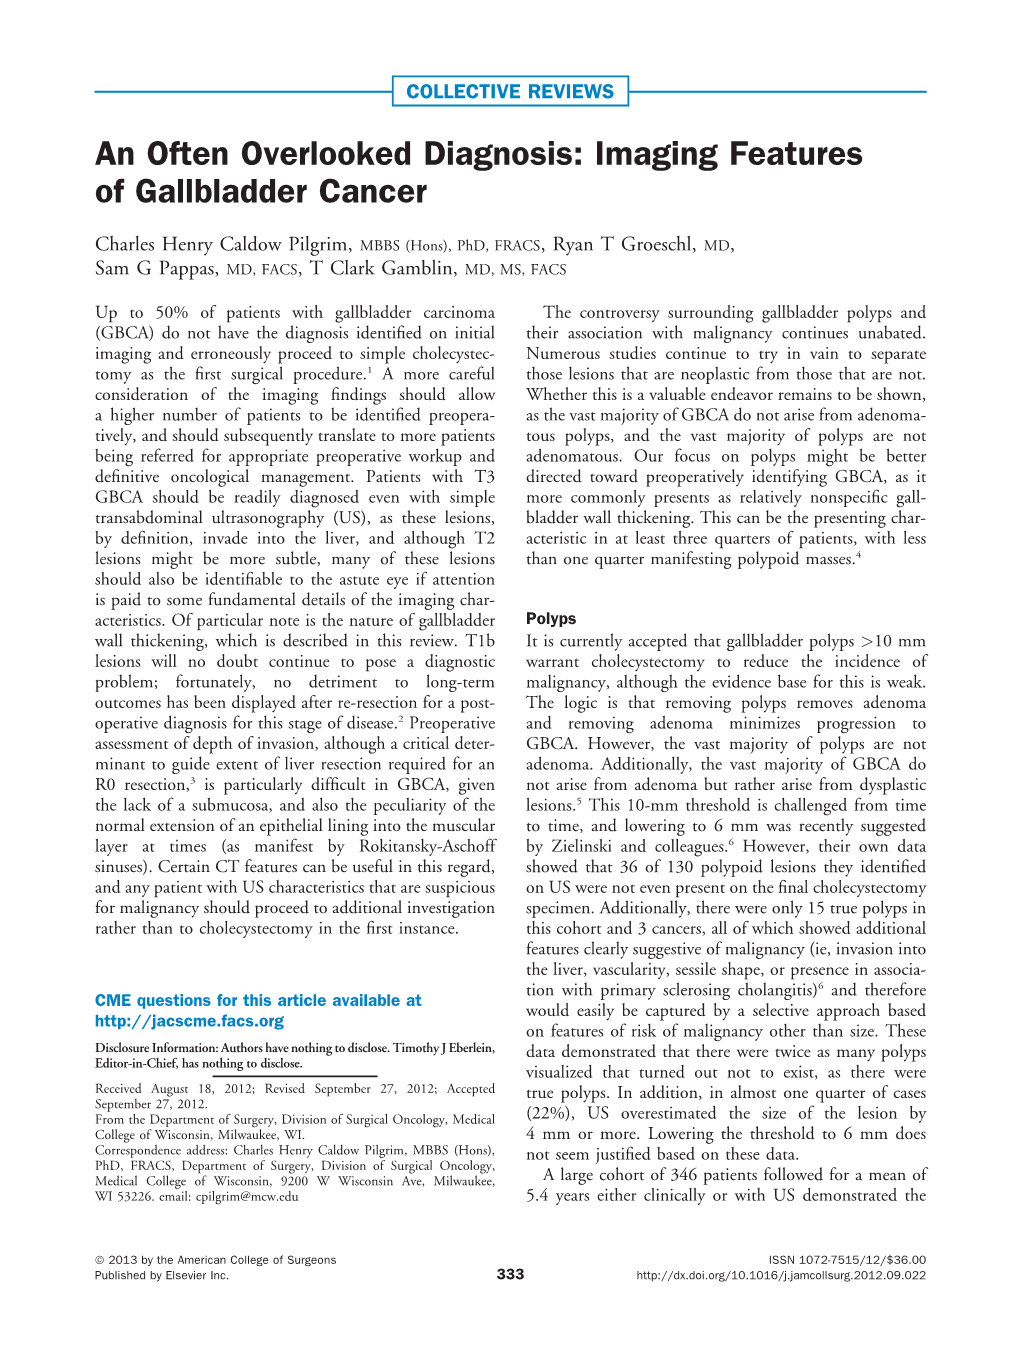 Imaging Features of Gallbladder Cancer